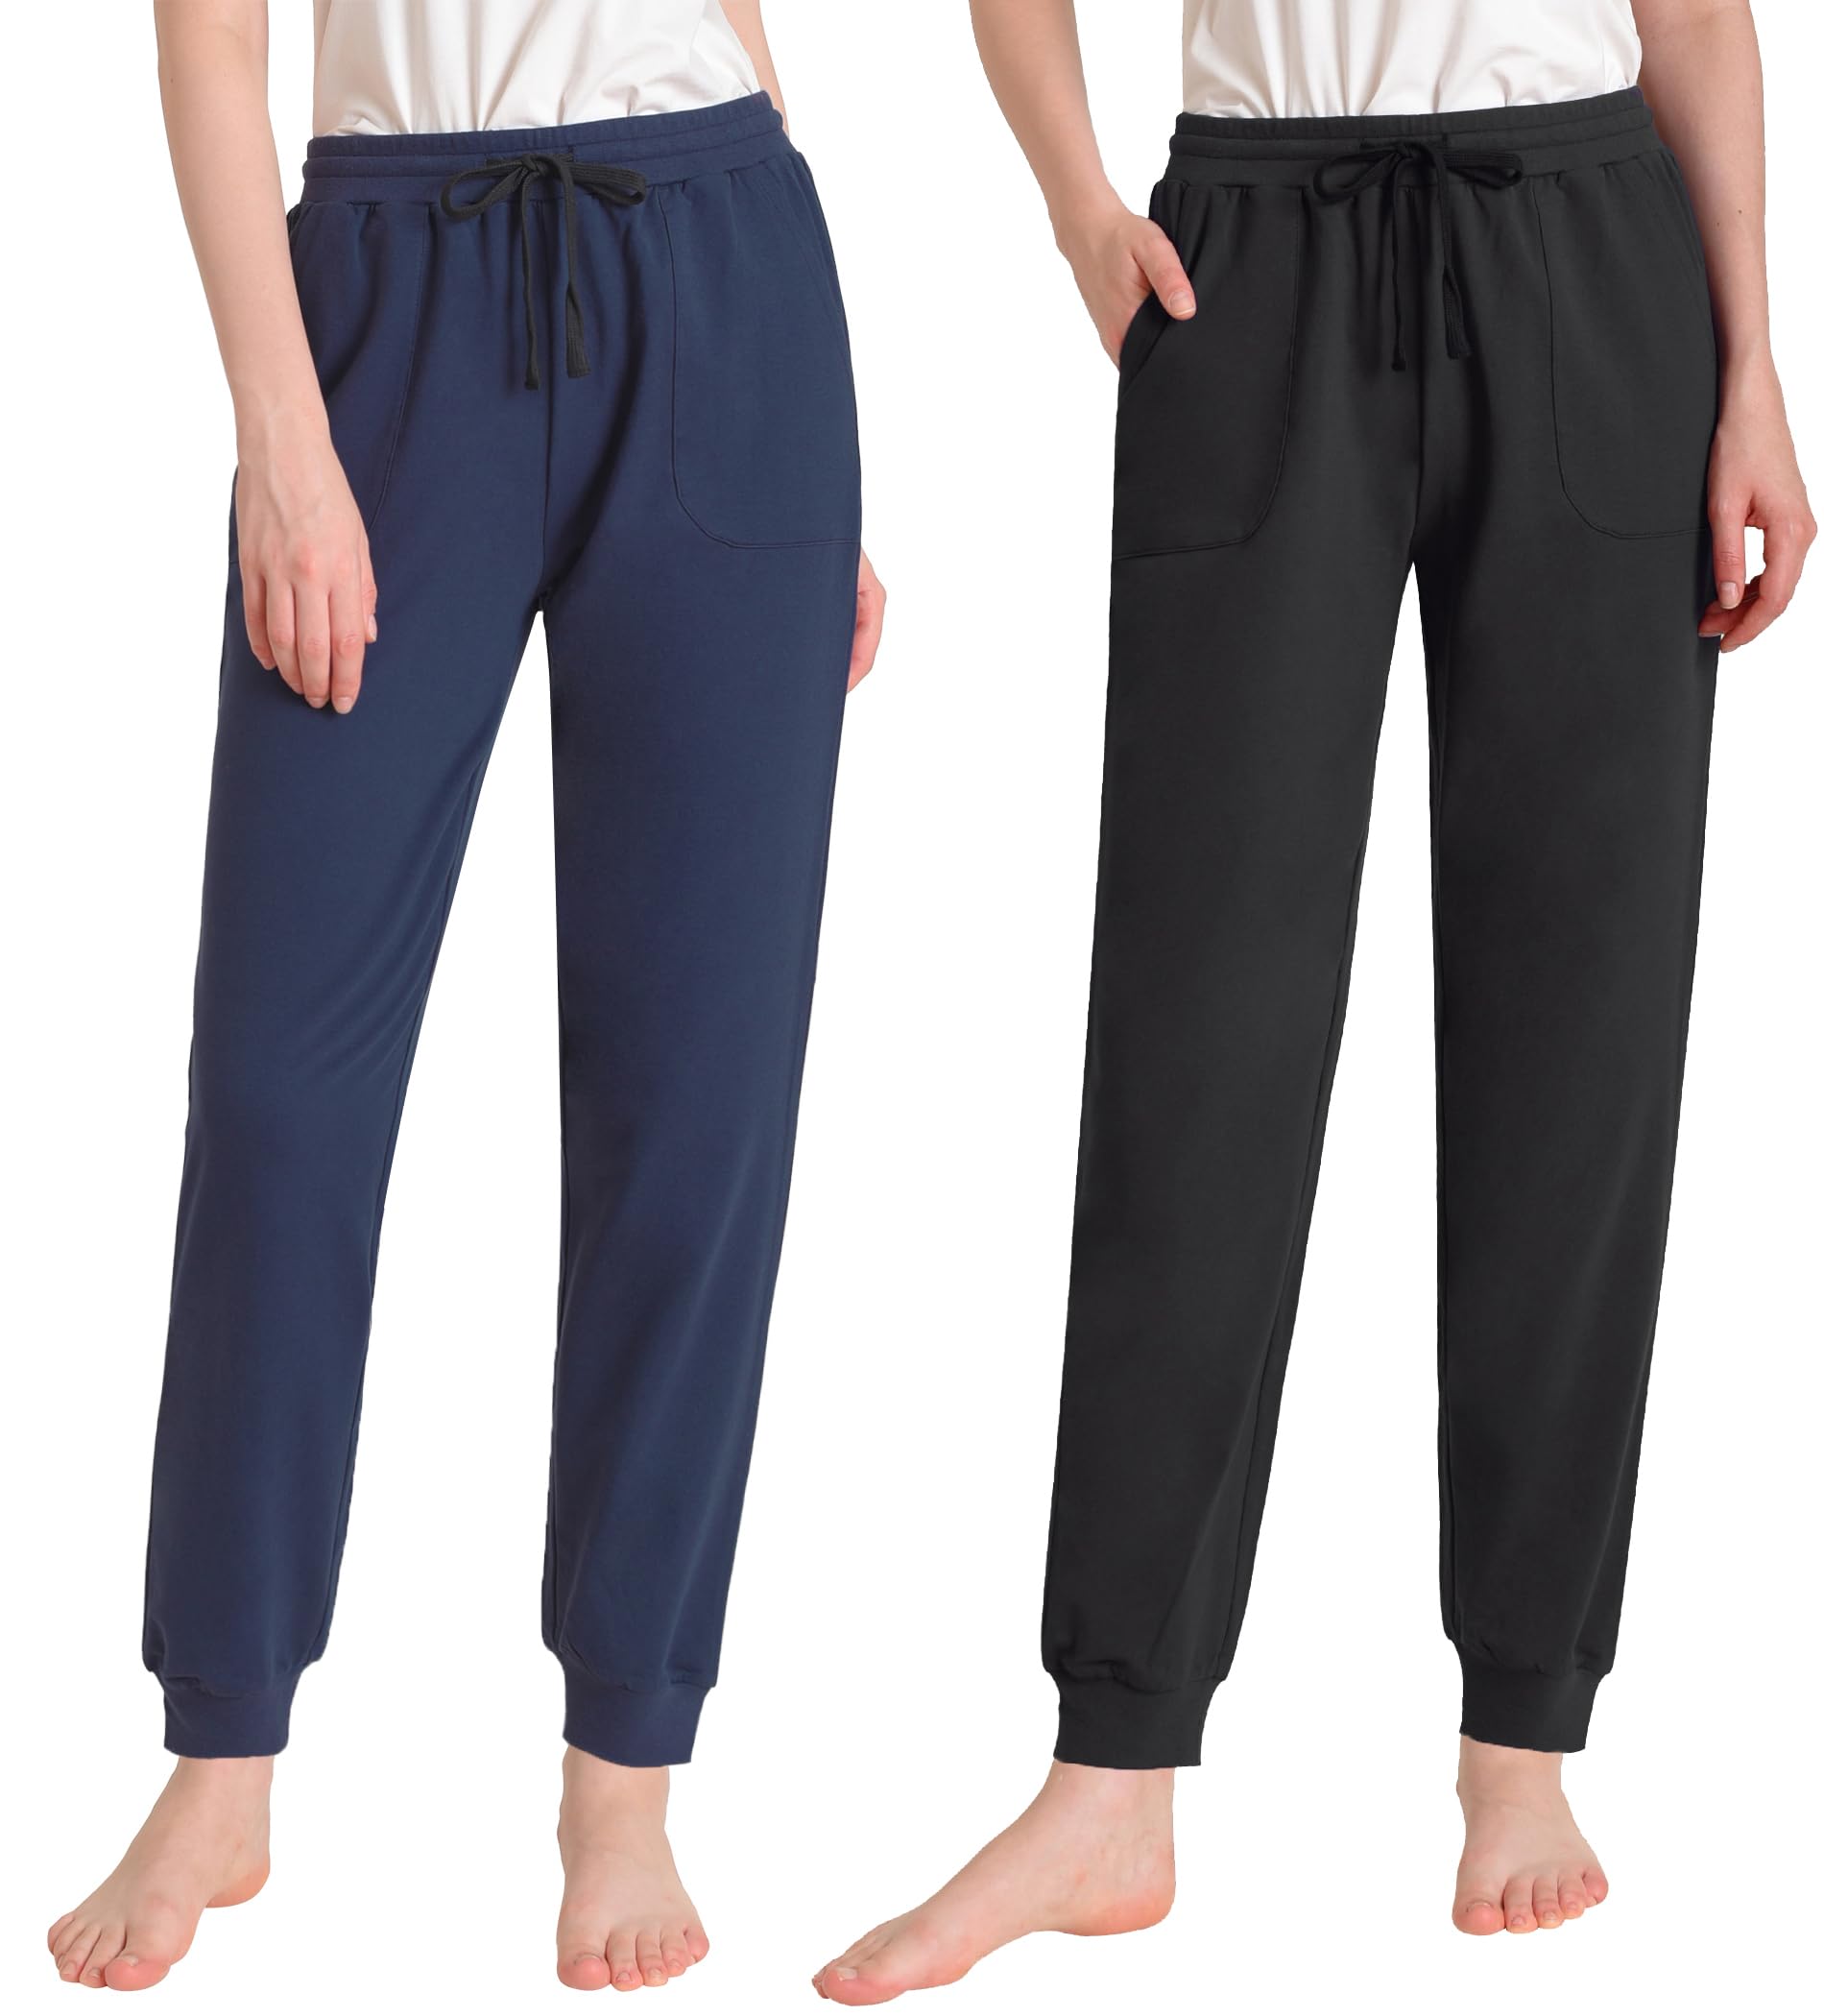 Women's Lounge Pants with Pockets Comfy Cotton PJ Bottoms